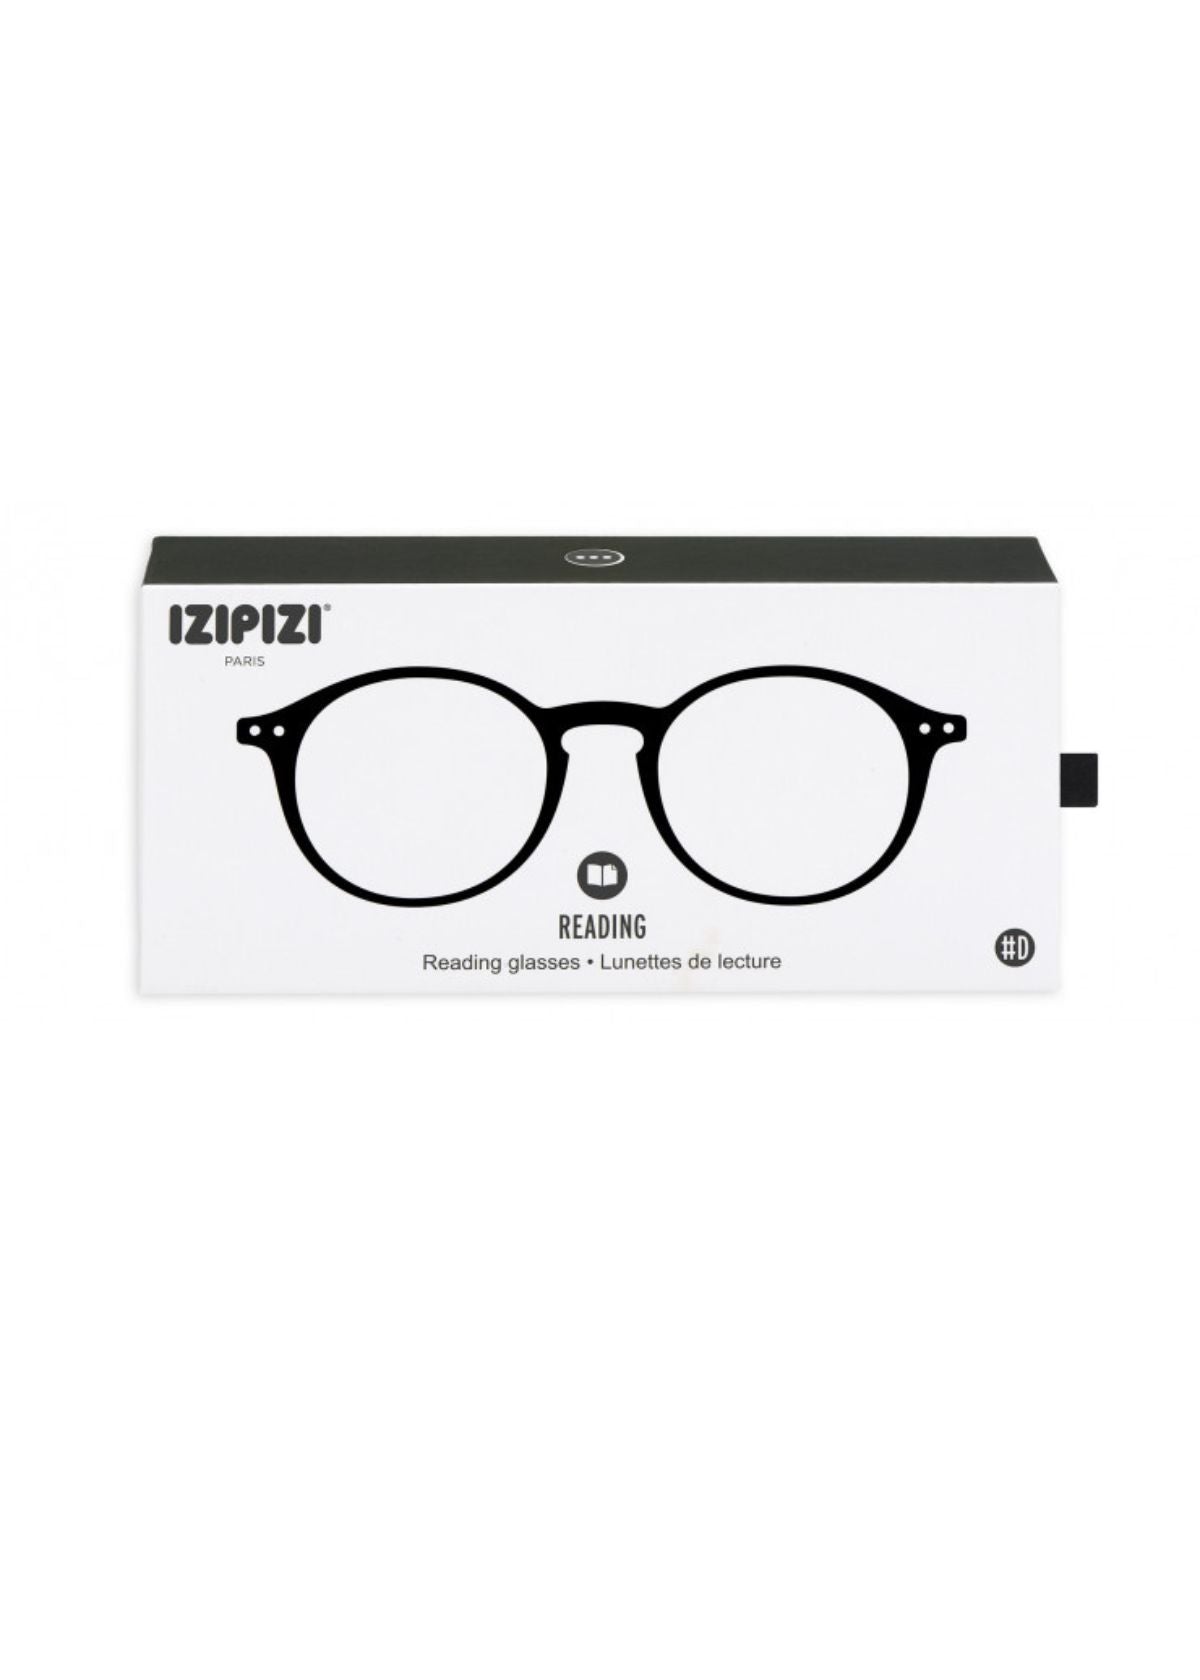 IZIPIZI Iconic Round Reading Glasses #D in Black